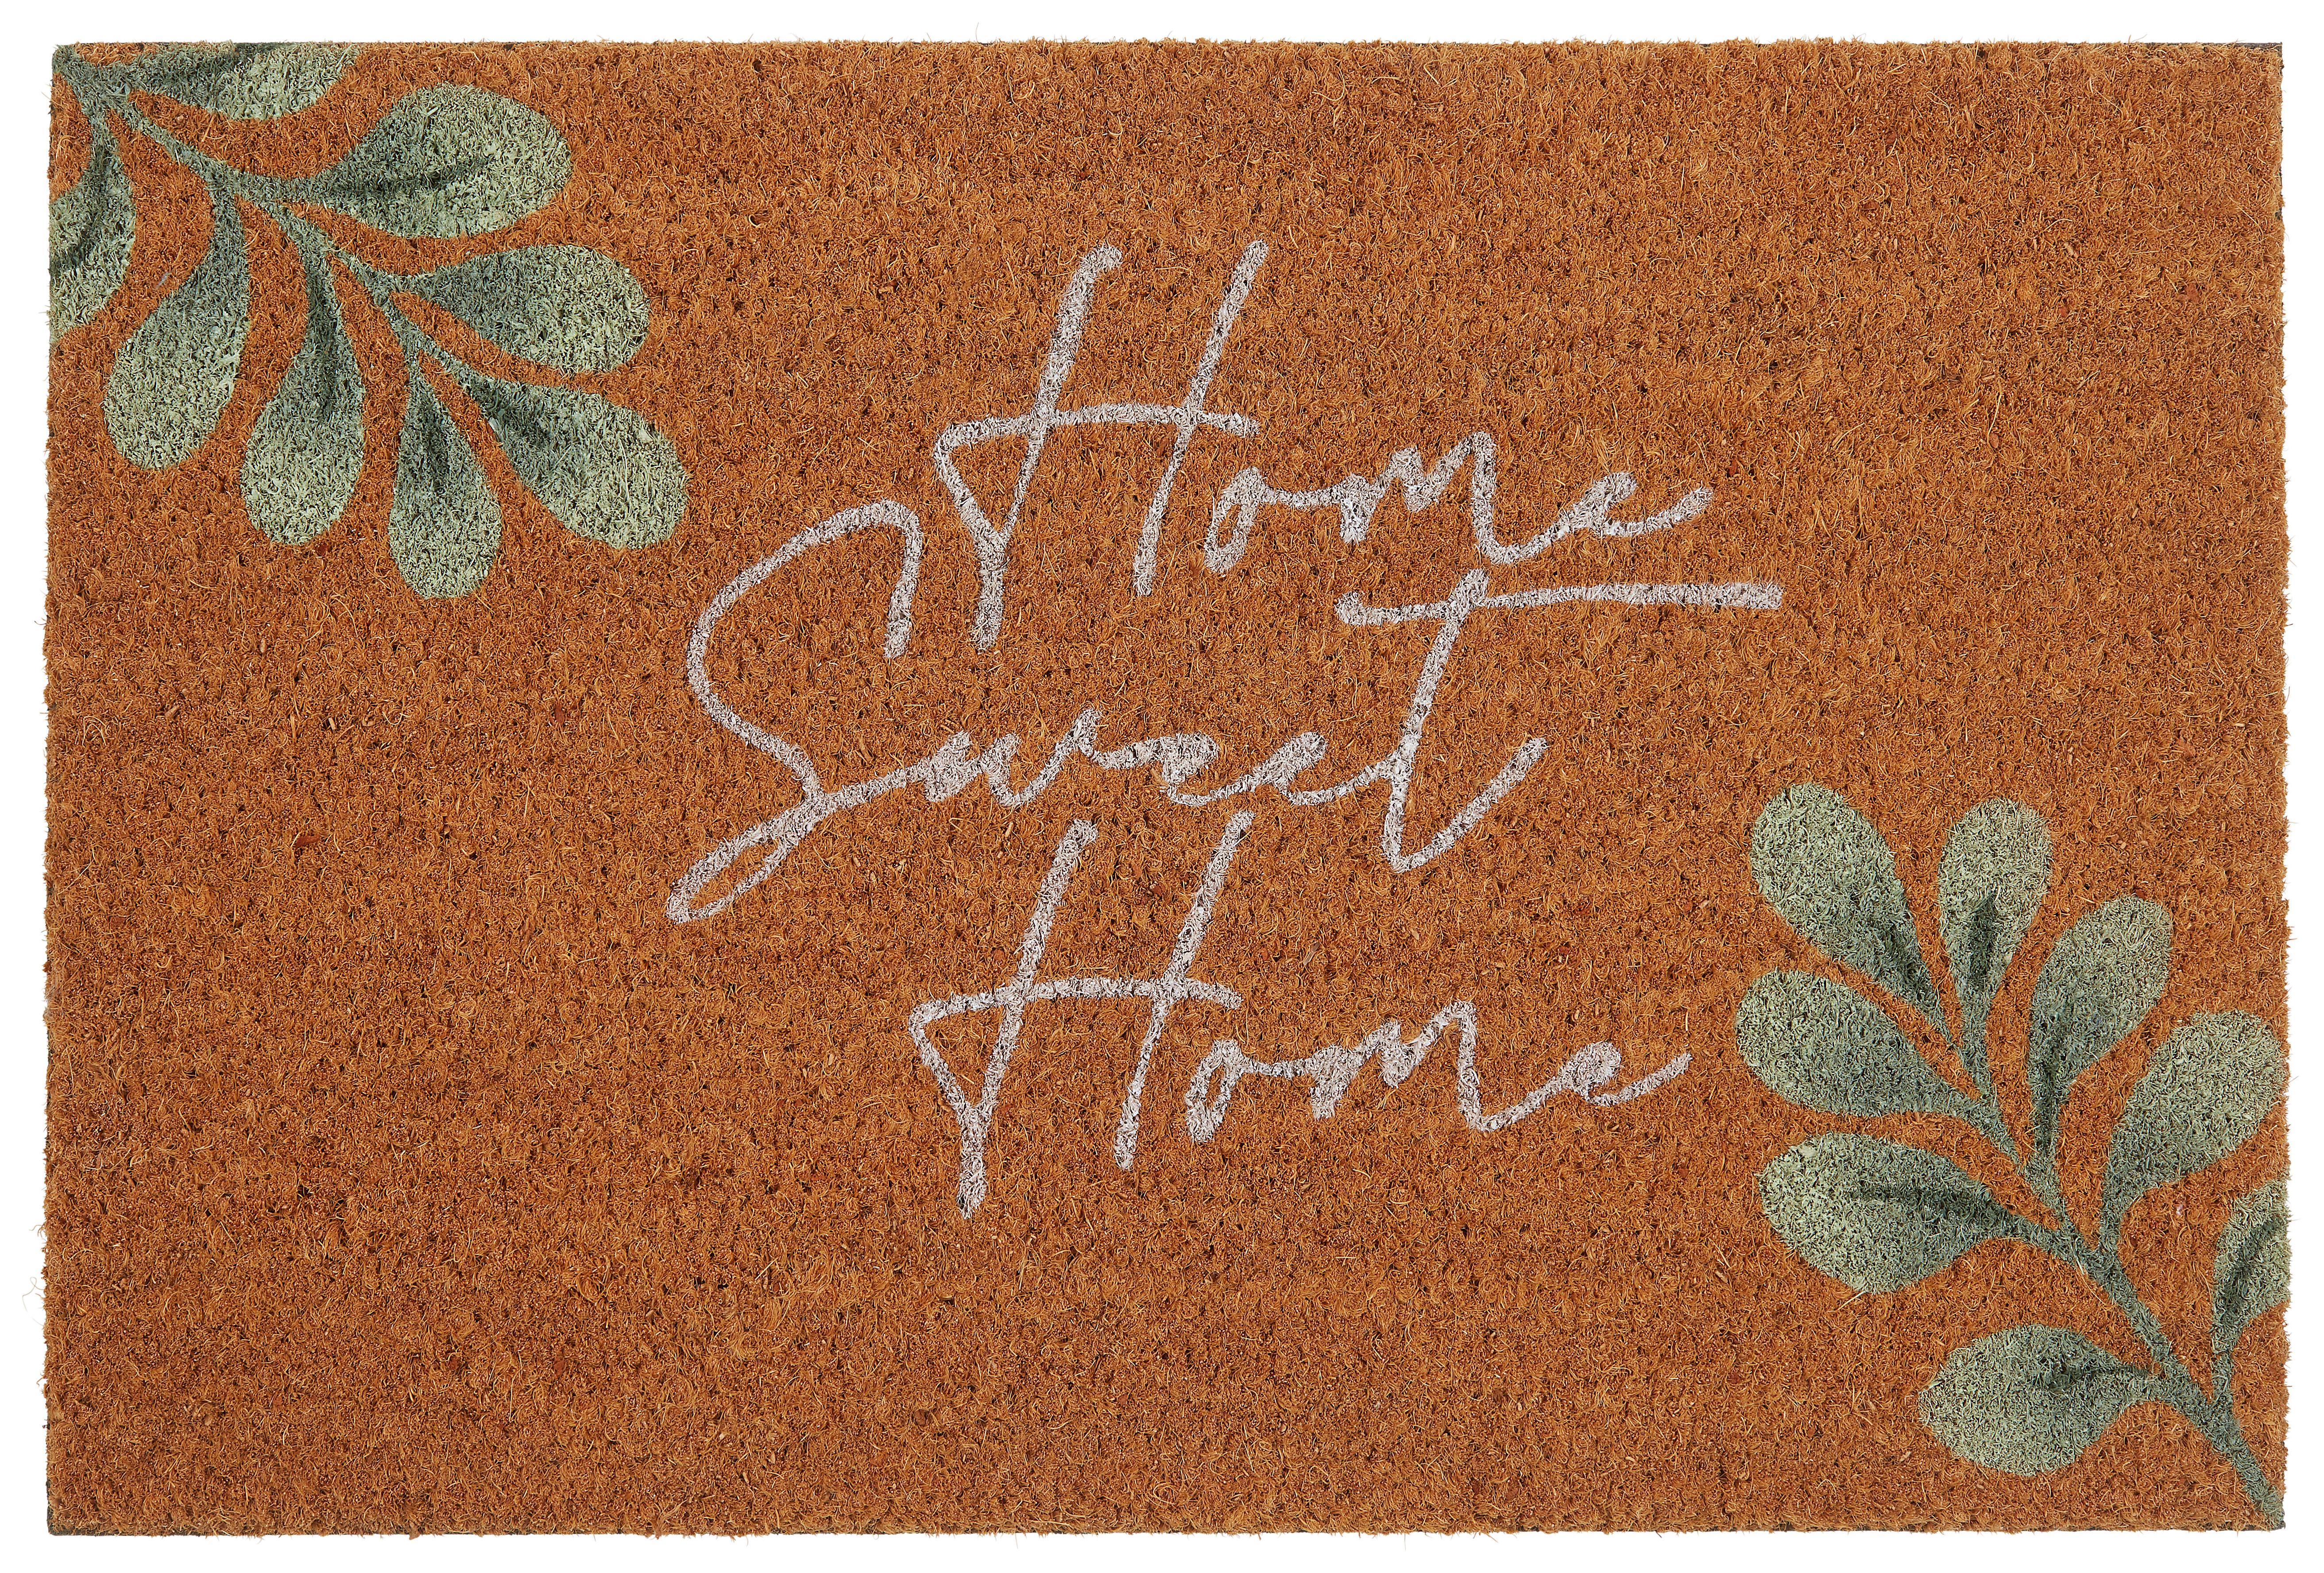 Fussmatte Home Sweet Home ca. 40x60cm - Braun, Lifestyle, Textil (40/60cm) - Modern Living